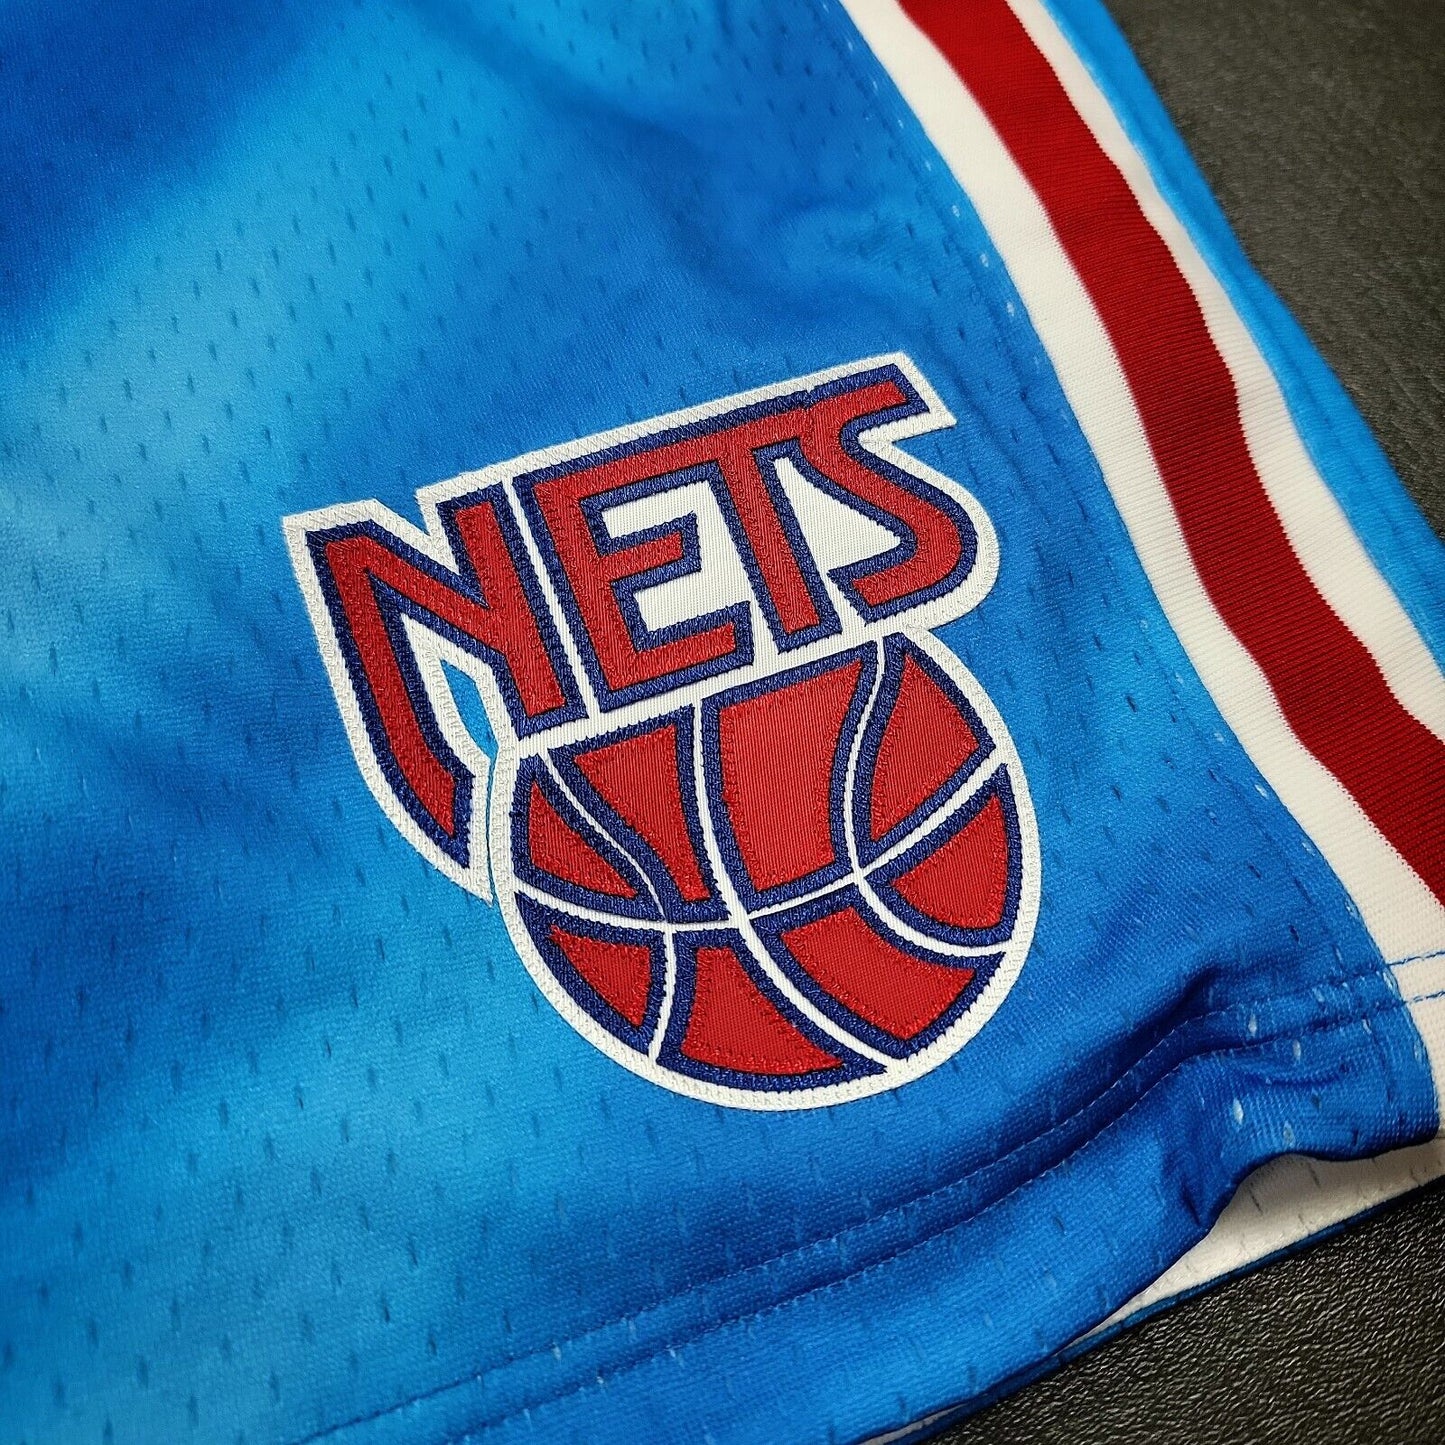 100% Authentic Mitchell & Ness 90 91 NJ Nets Shorts Size 48 XL Mens